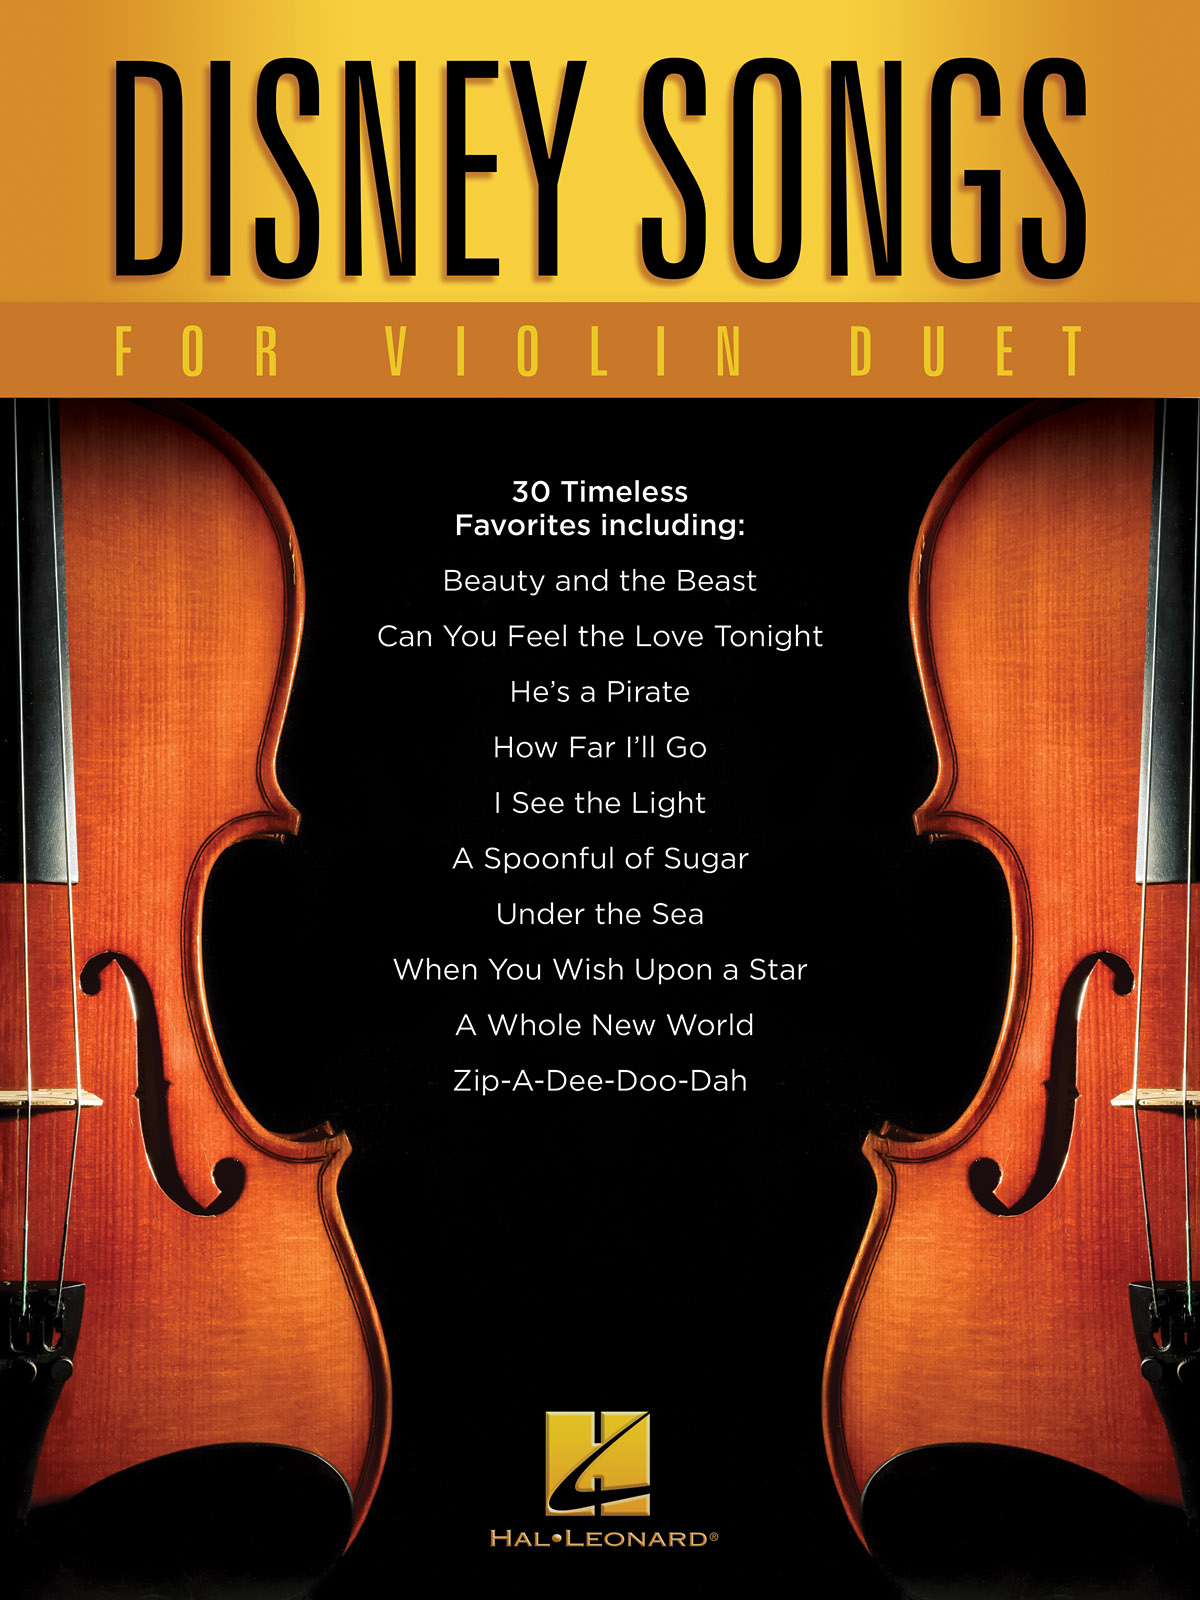 Disney Songs for Violin Duet noty pro dvoje housle